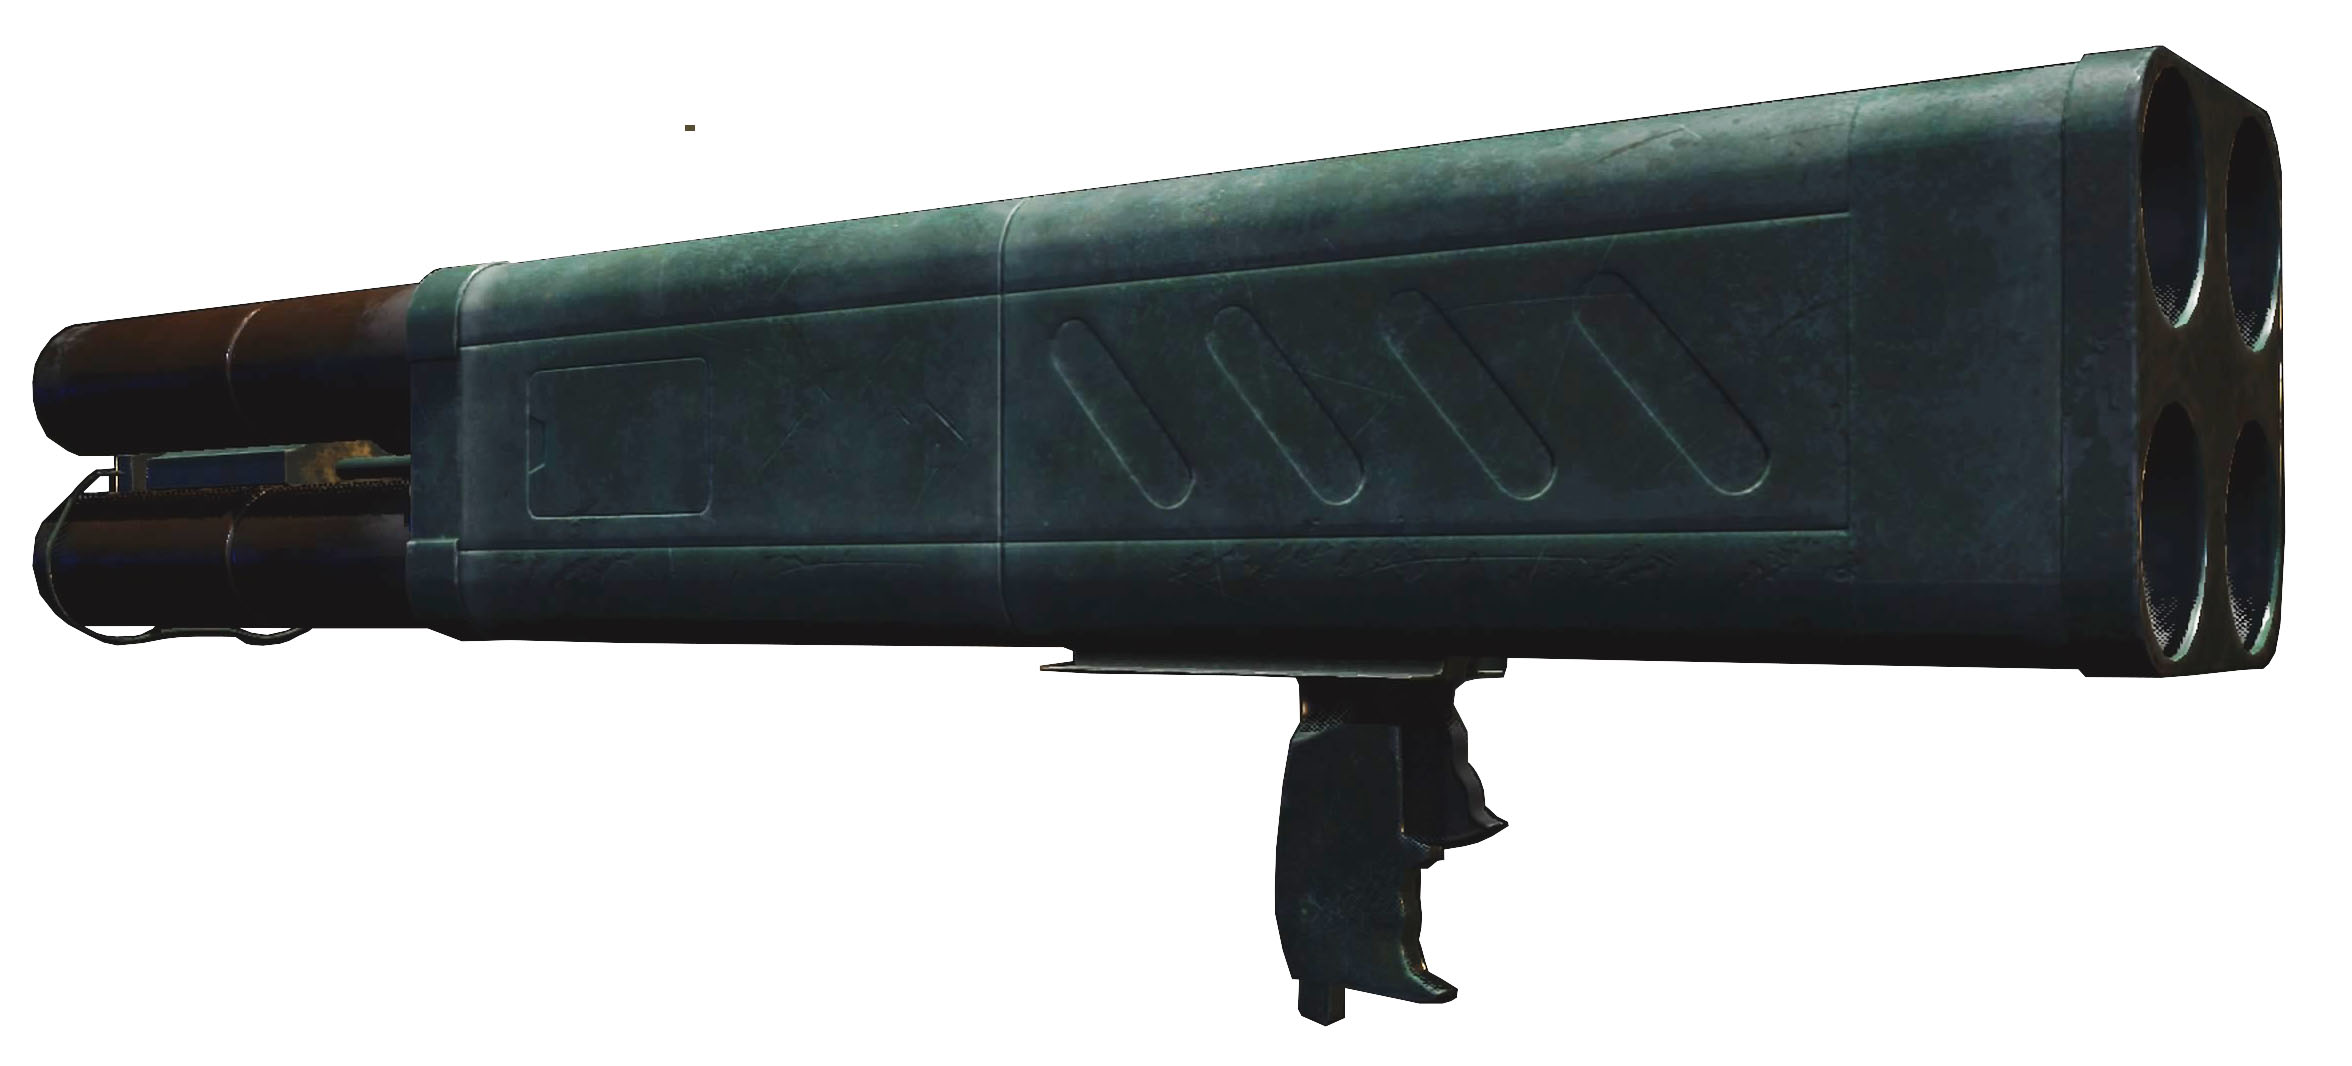 Resident Evil 2, 2019 года – Противотанковая ракета (Anti-tank Rocket)